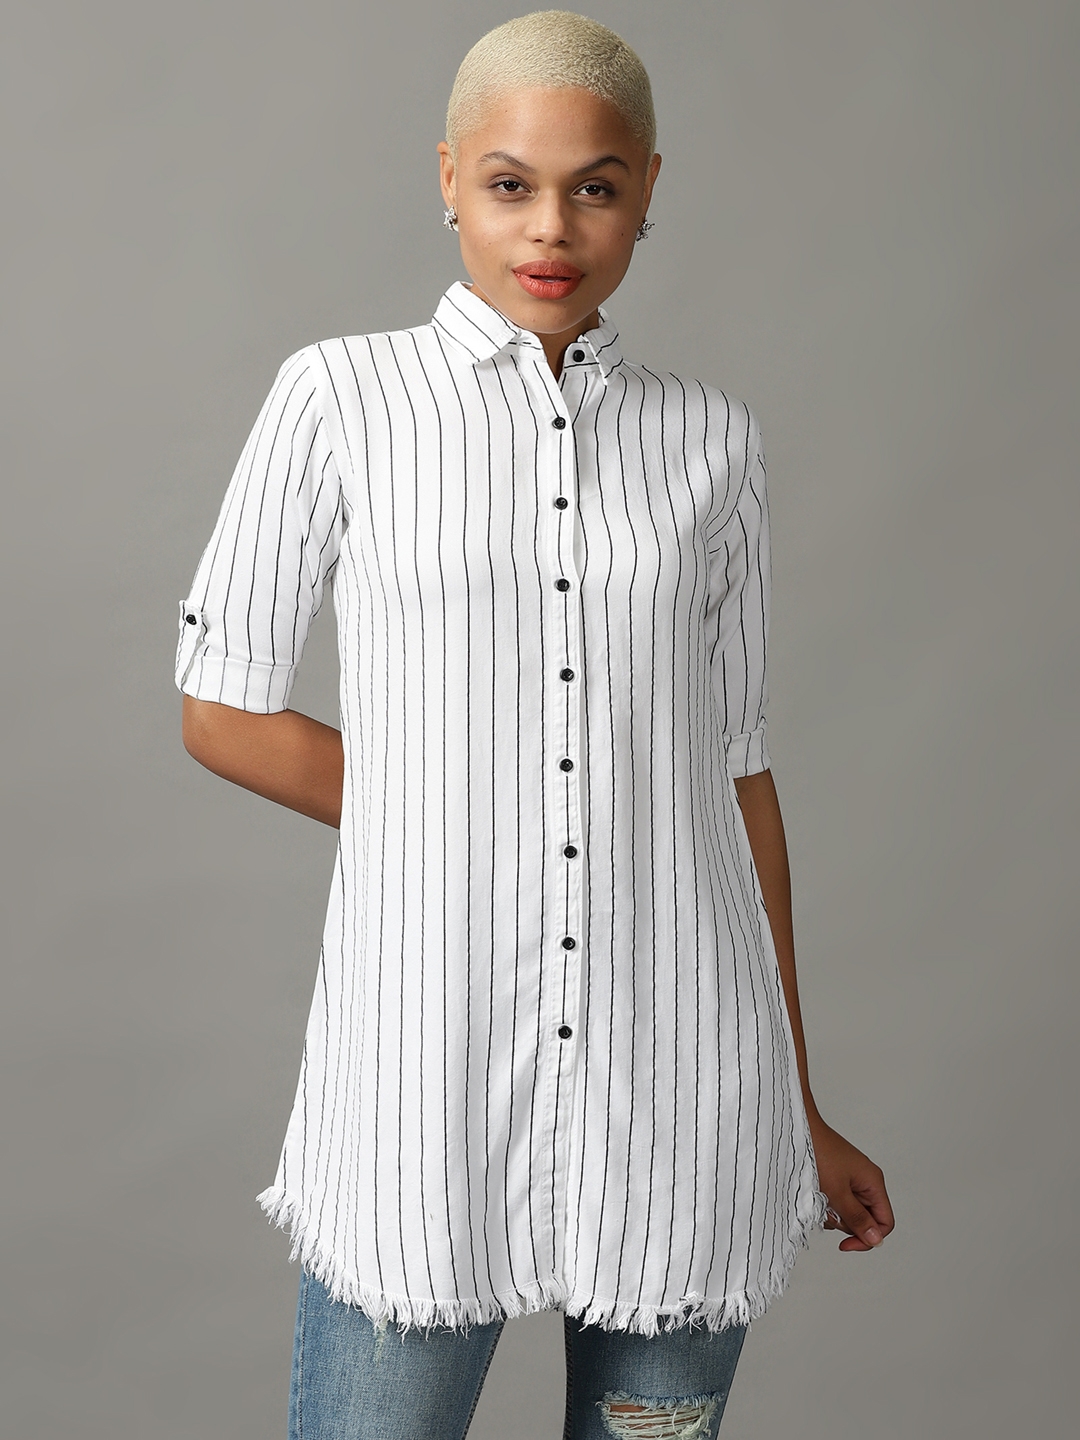 Women's White Cotton Striped Casual Shirts